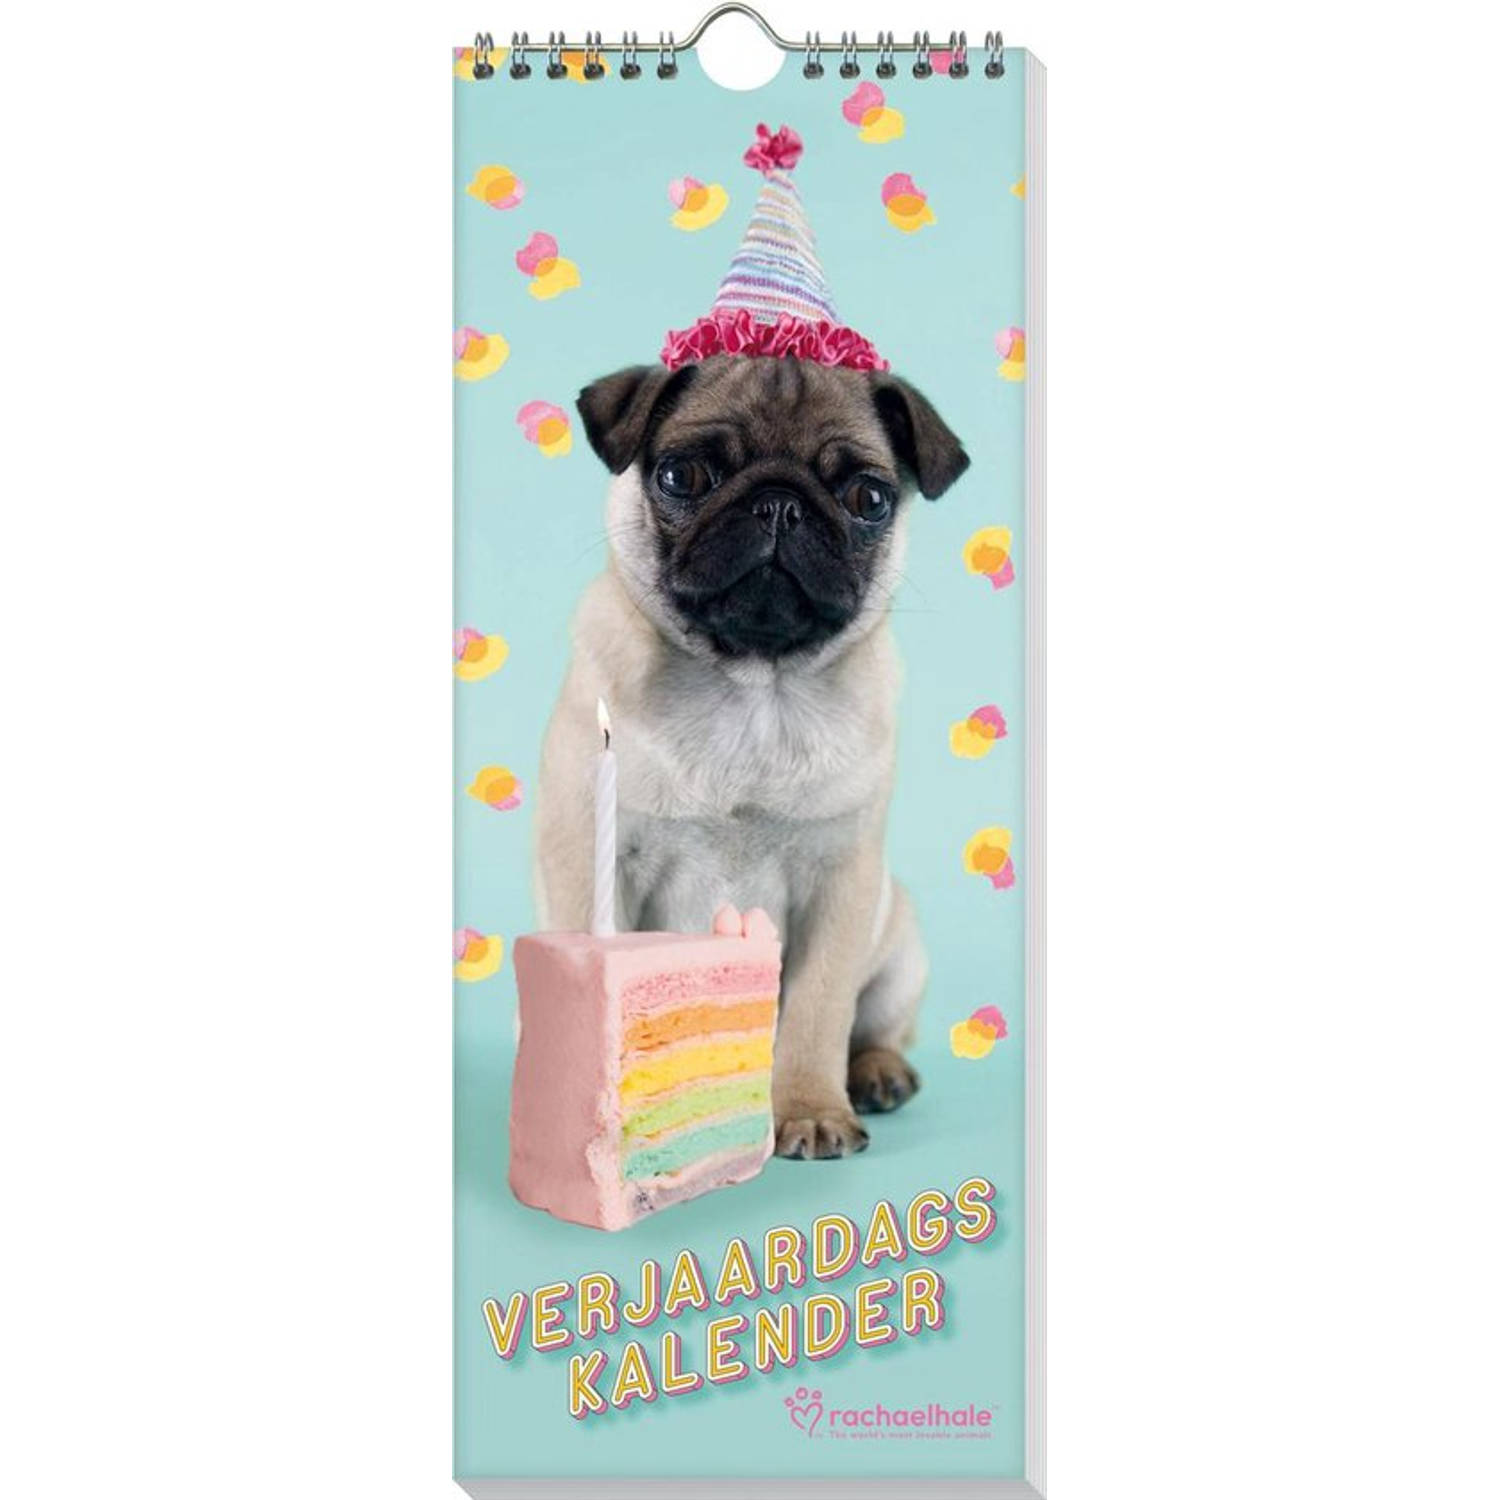 Verjaardagskalender Puppies - Rachael Hale - 13 X 33 cm